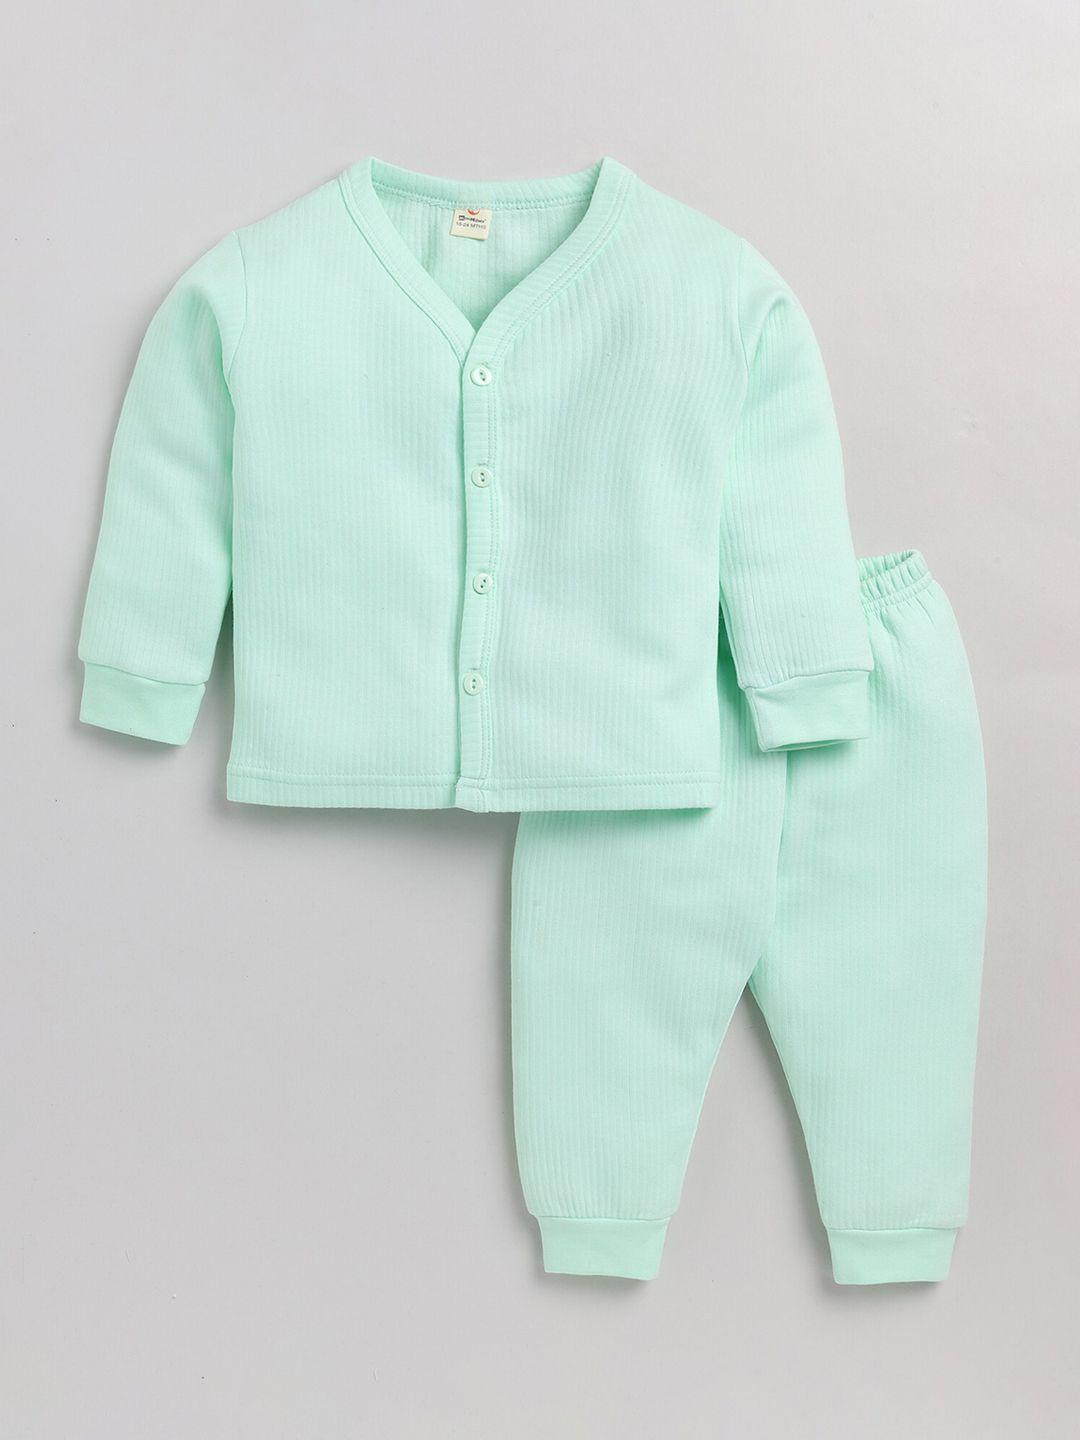 moonkids infants green lightweight thermal set